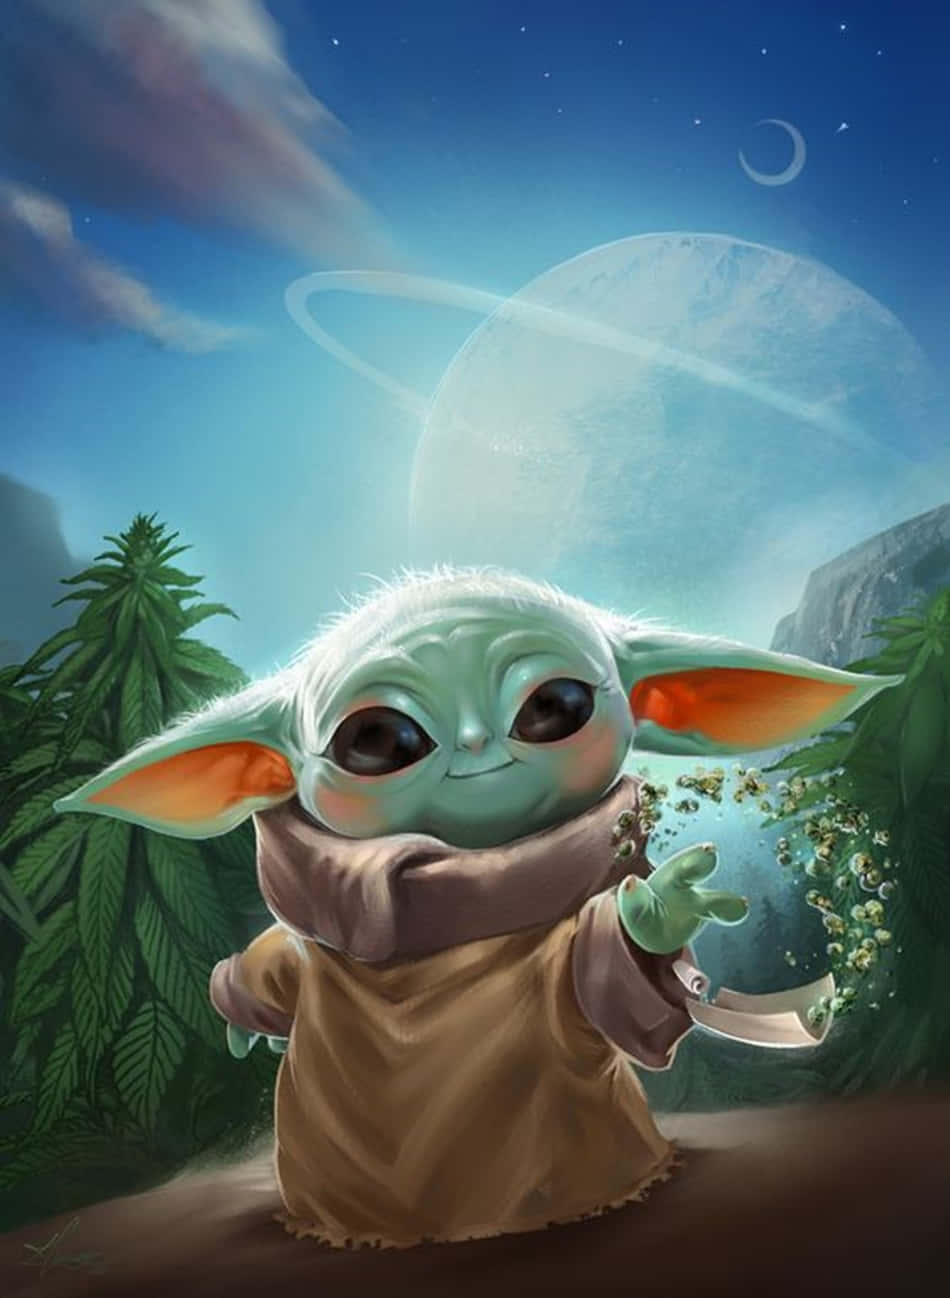 Sweet and Adorable Baby Yoda Wallpaper